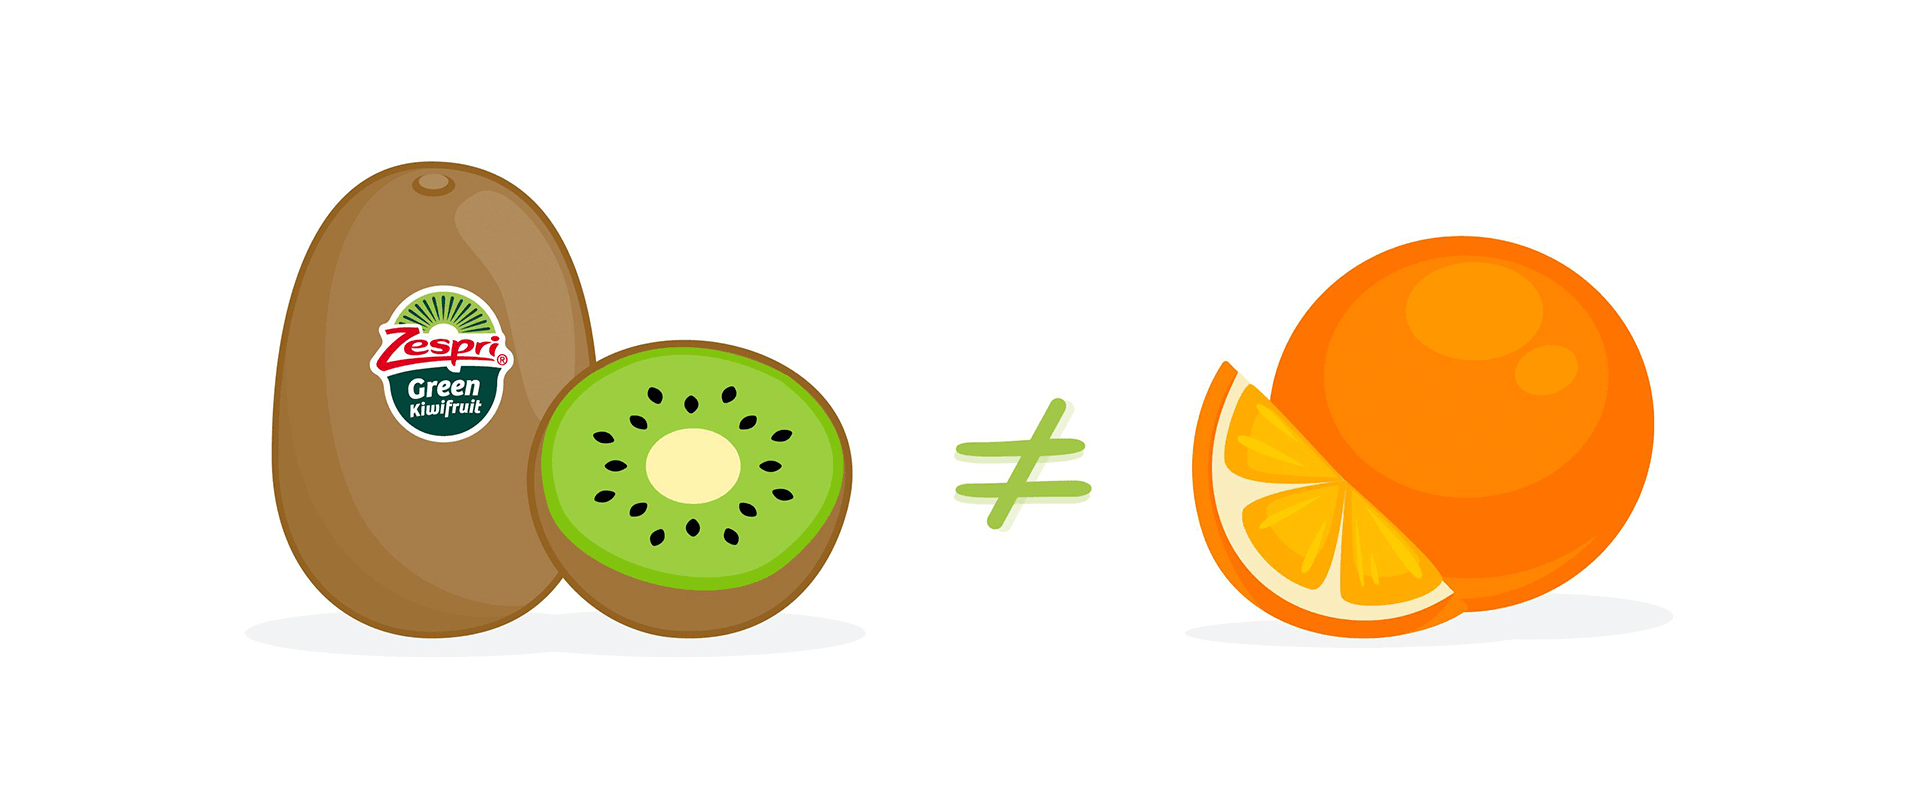 De mythe ontkracht: Is de kiwi een citrusvrucht?